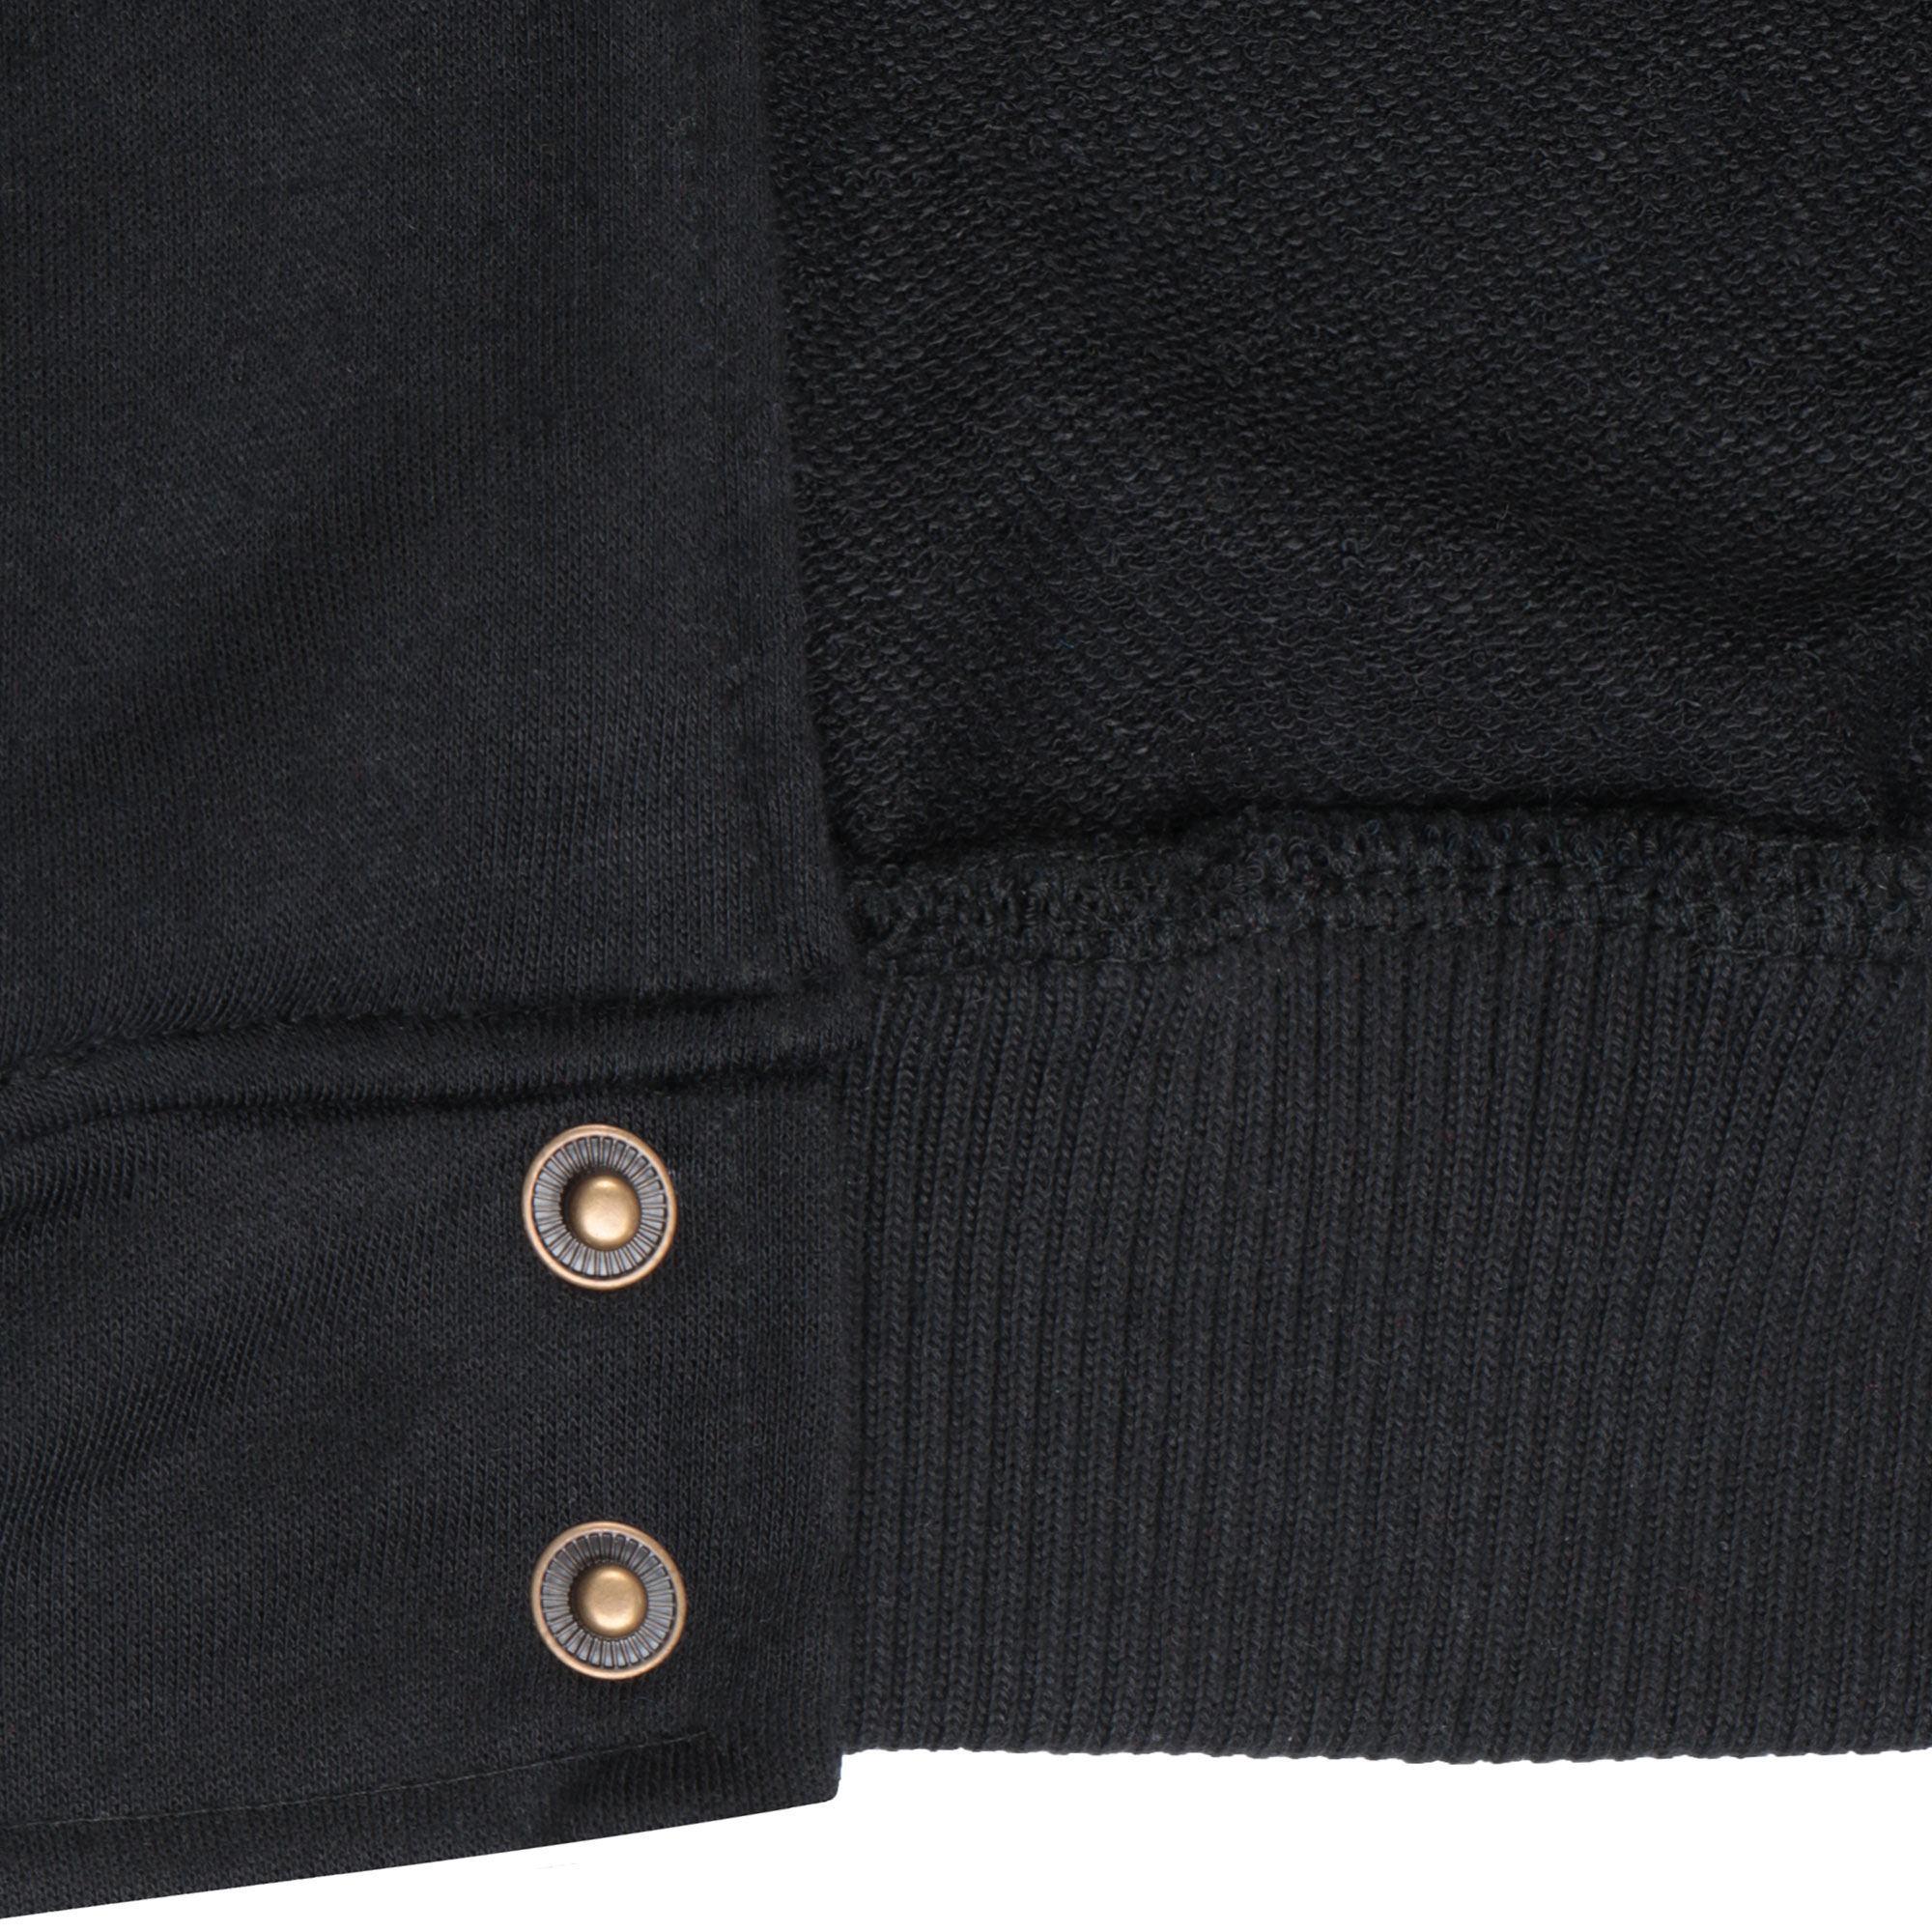 Бомбер Garment чёрный/белый XXL полиэстер, цвет черный, размер XXL - фото 5